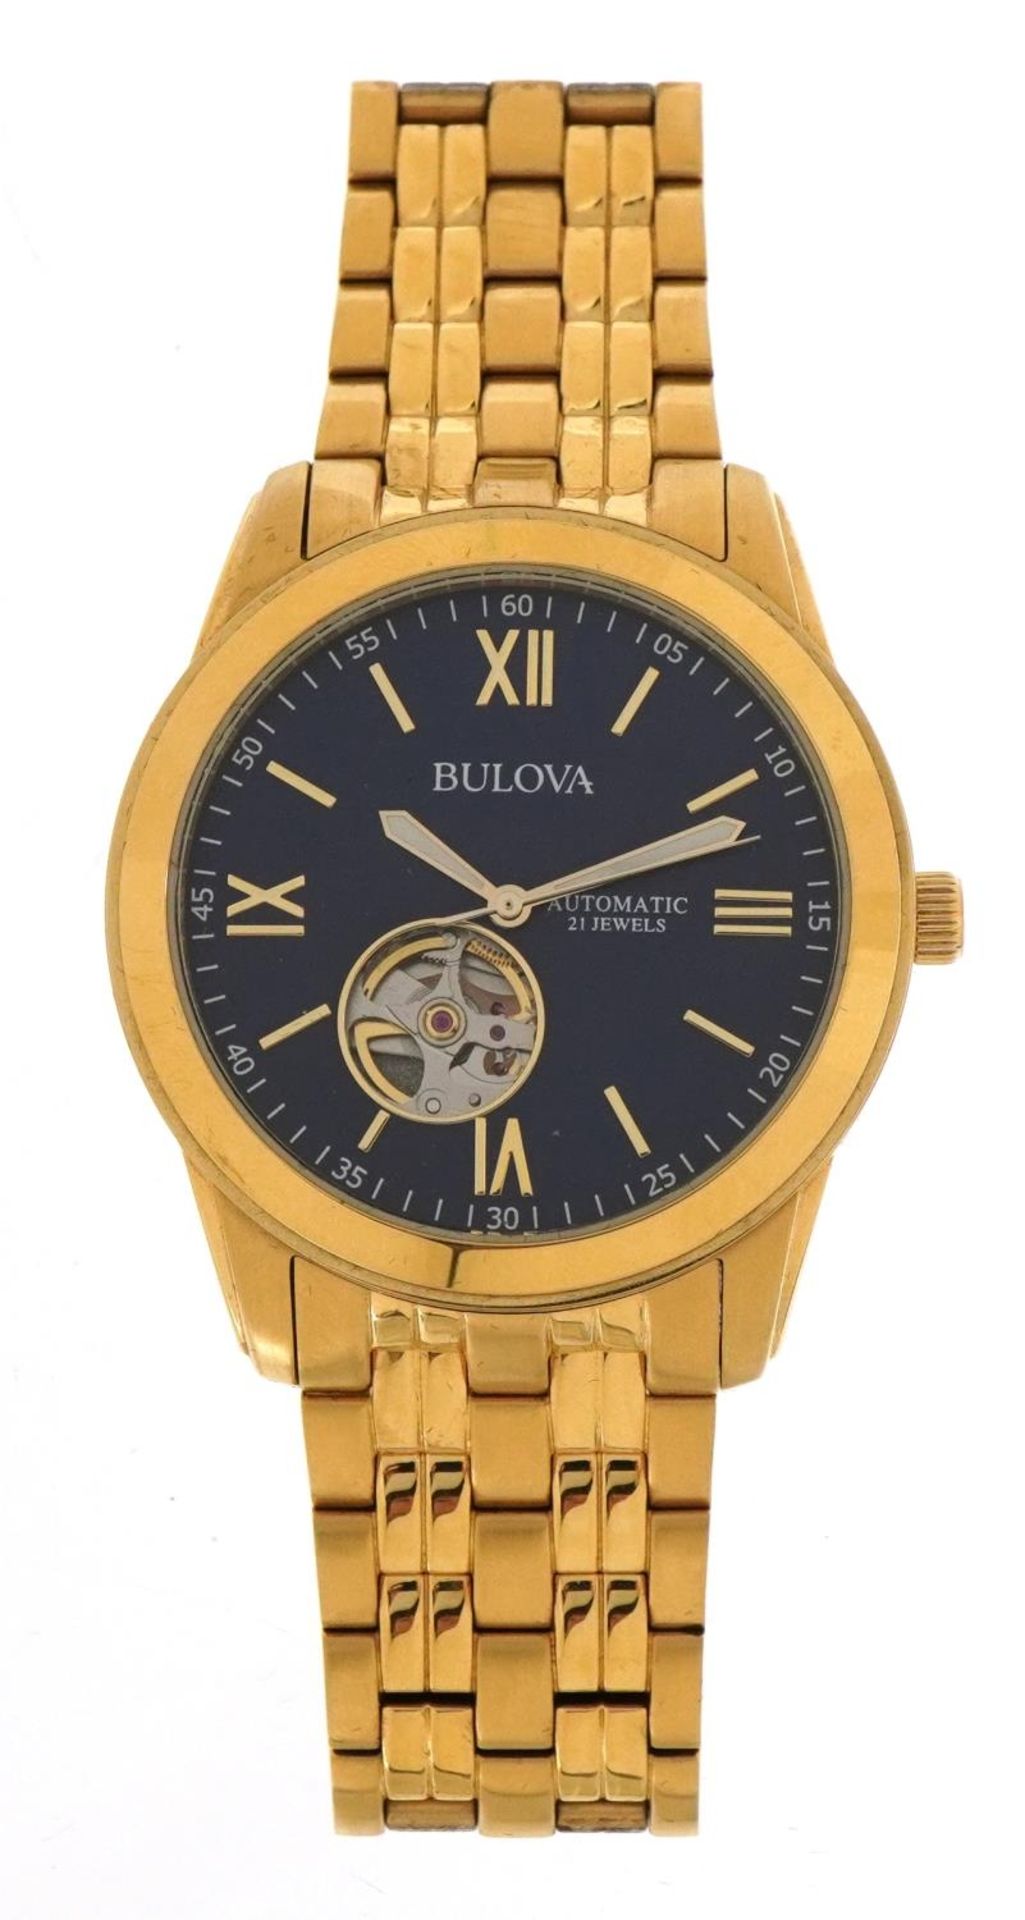 Bulova, gentlemen's Bulova 97A automatic wristwatch with box, 42mm in diameter - Image 2 of 7